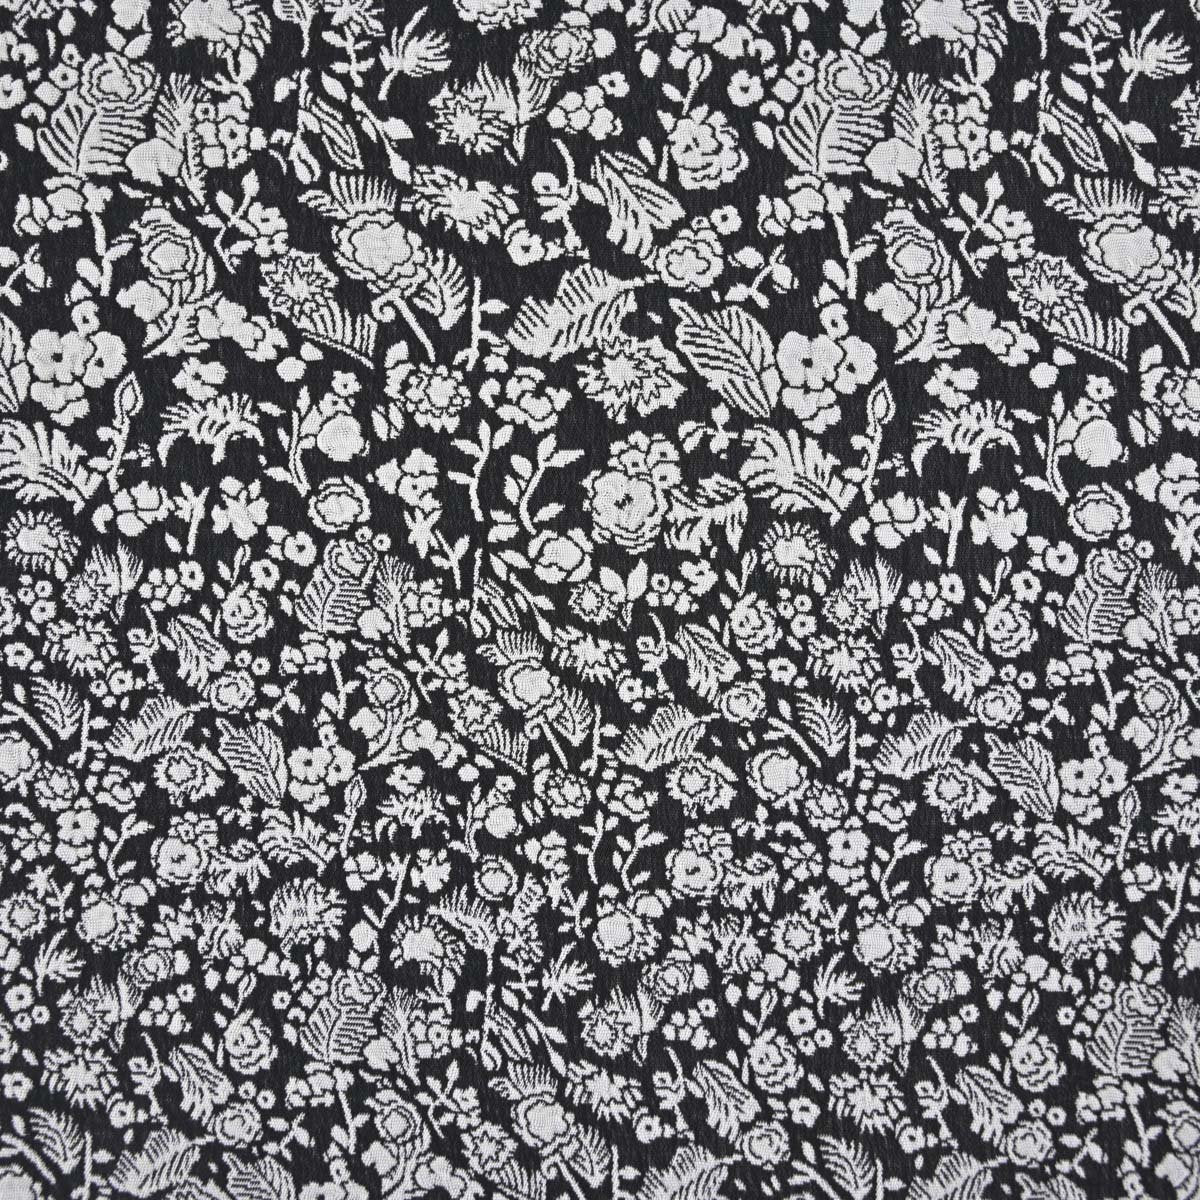 Black Floral Jacquard Fabric 3282